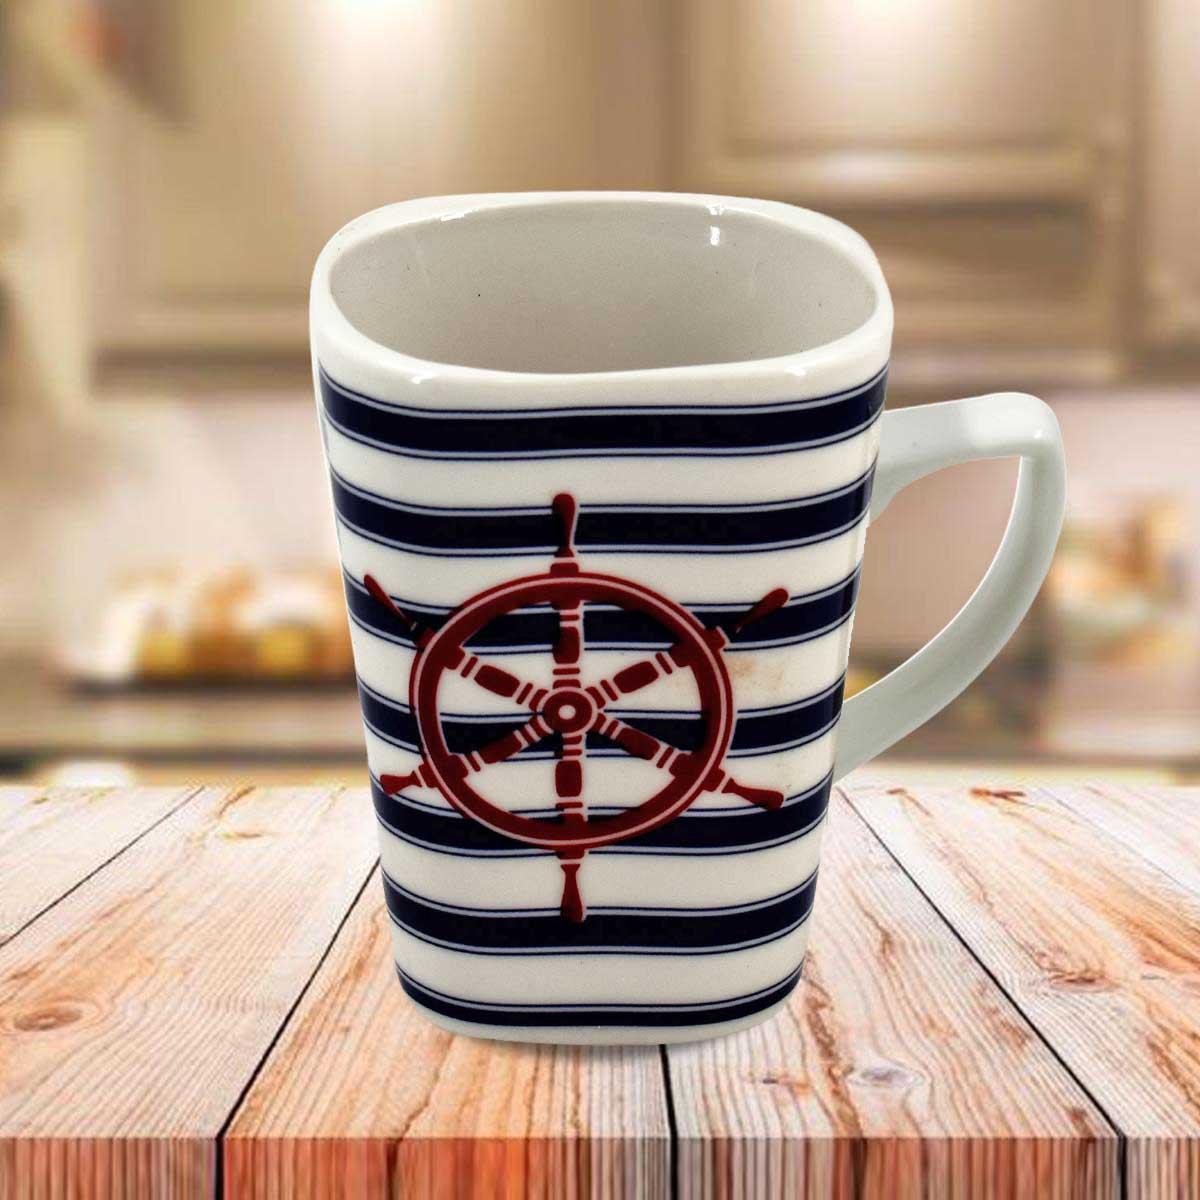 Printed Ceramic Tall Coffee or Tea Mug with handle - 325ml (BPM3402-C)